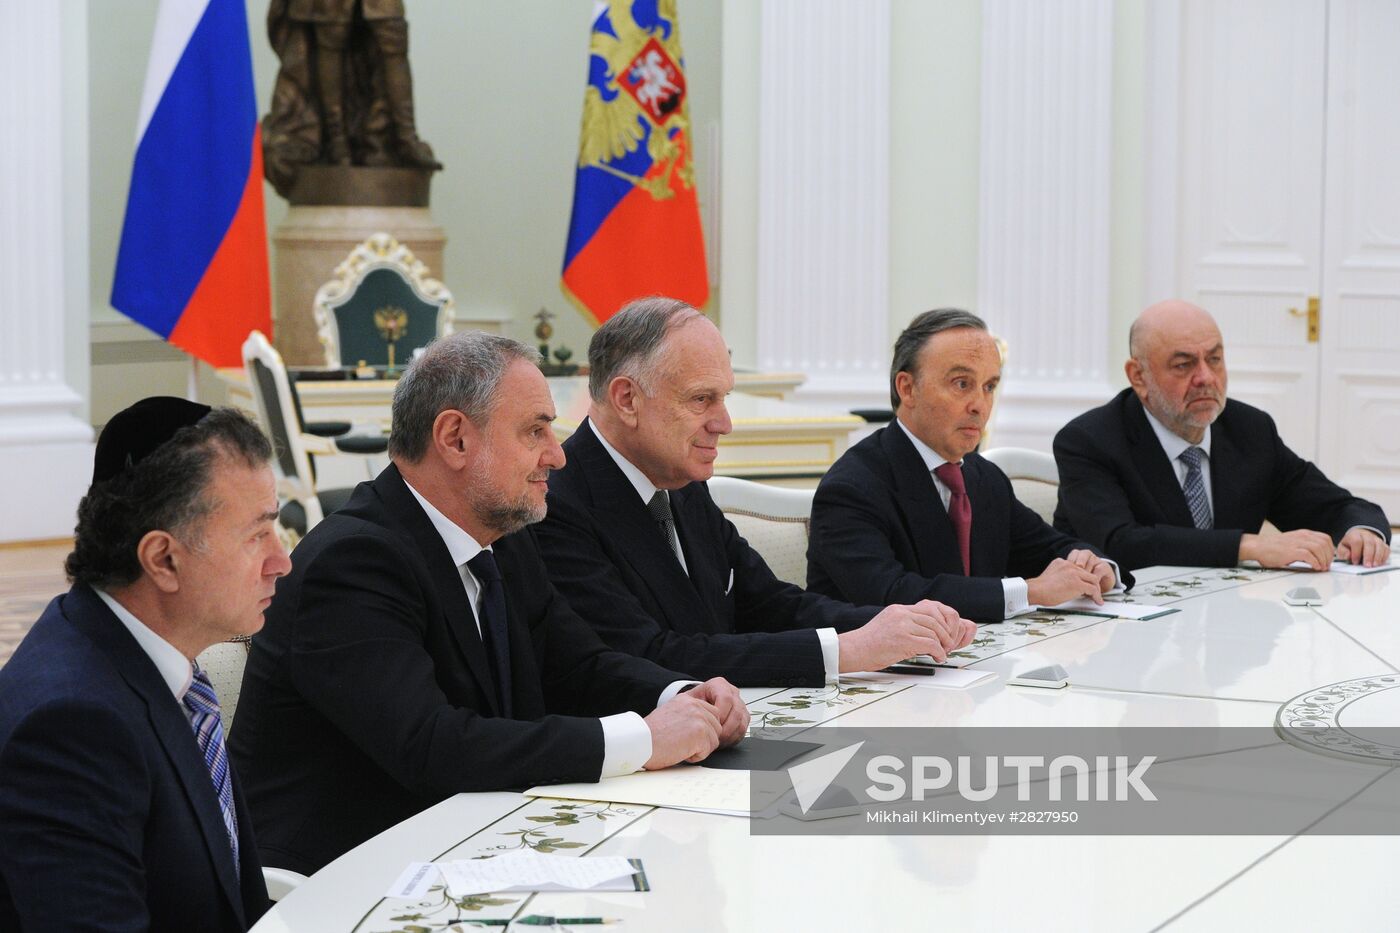 Vladimir Putin meets with World Jewish Congress President Ronald Lauder